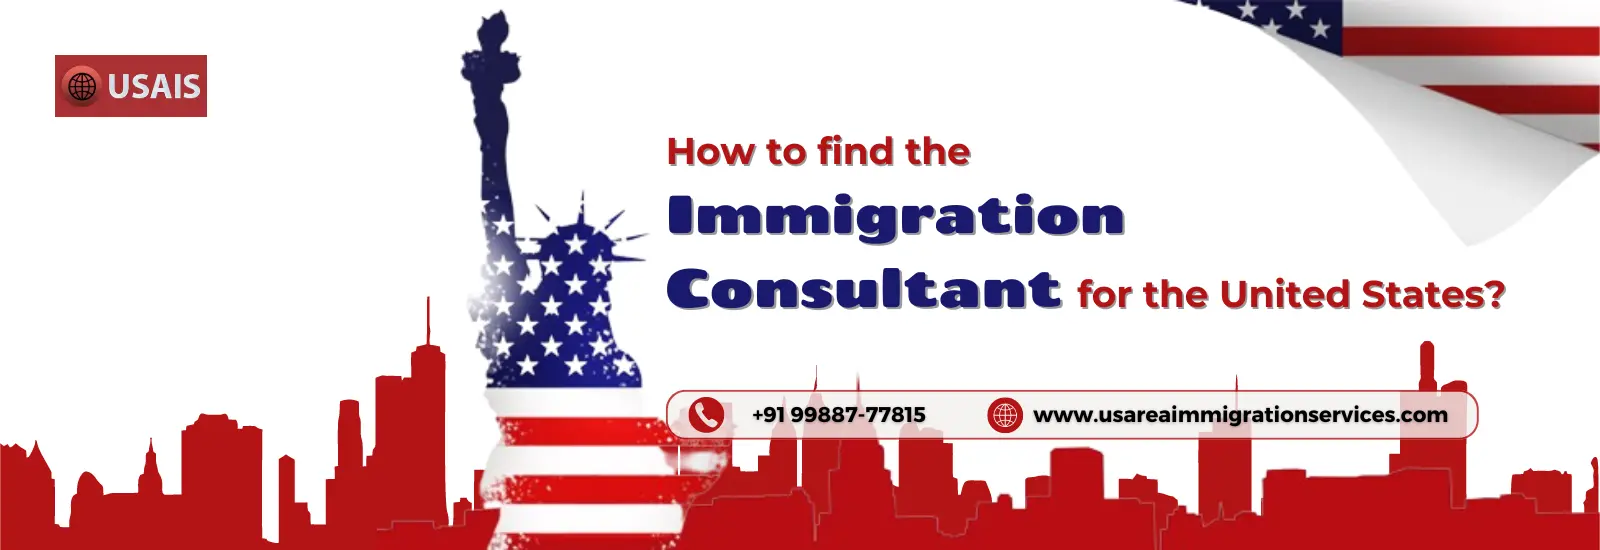 immigration-consultants